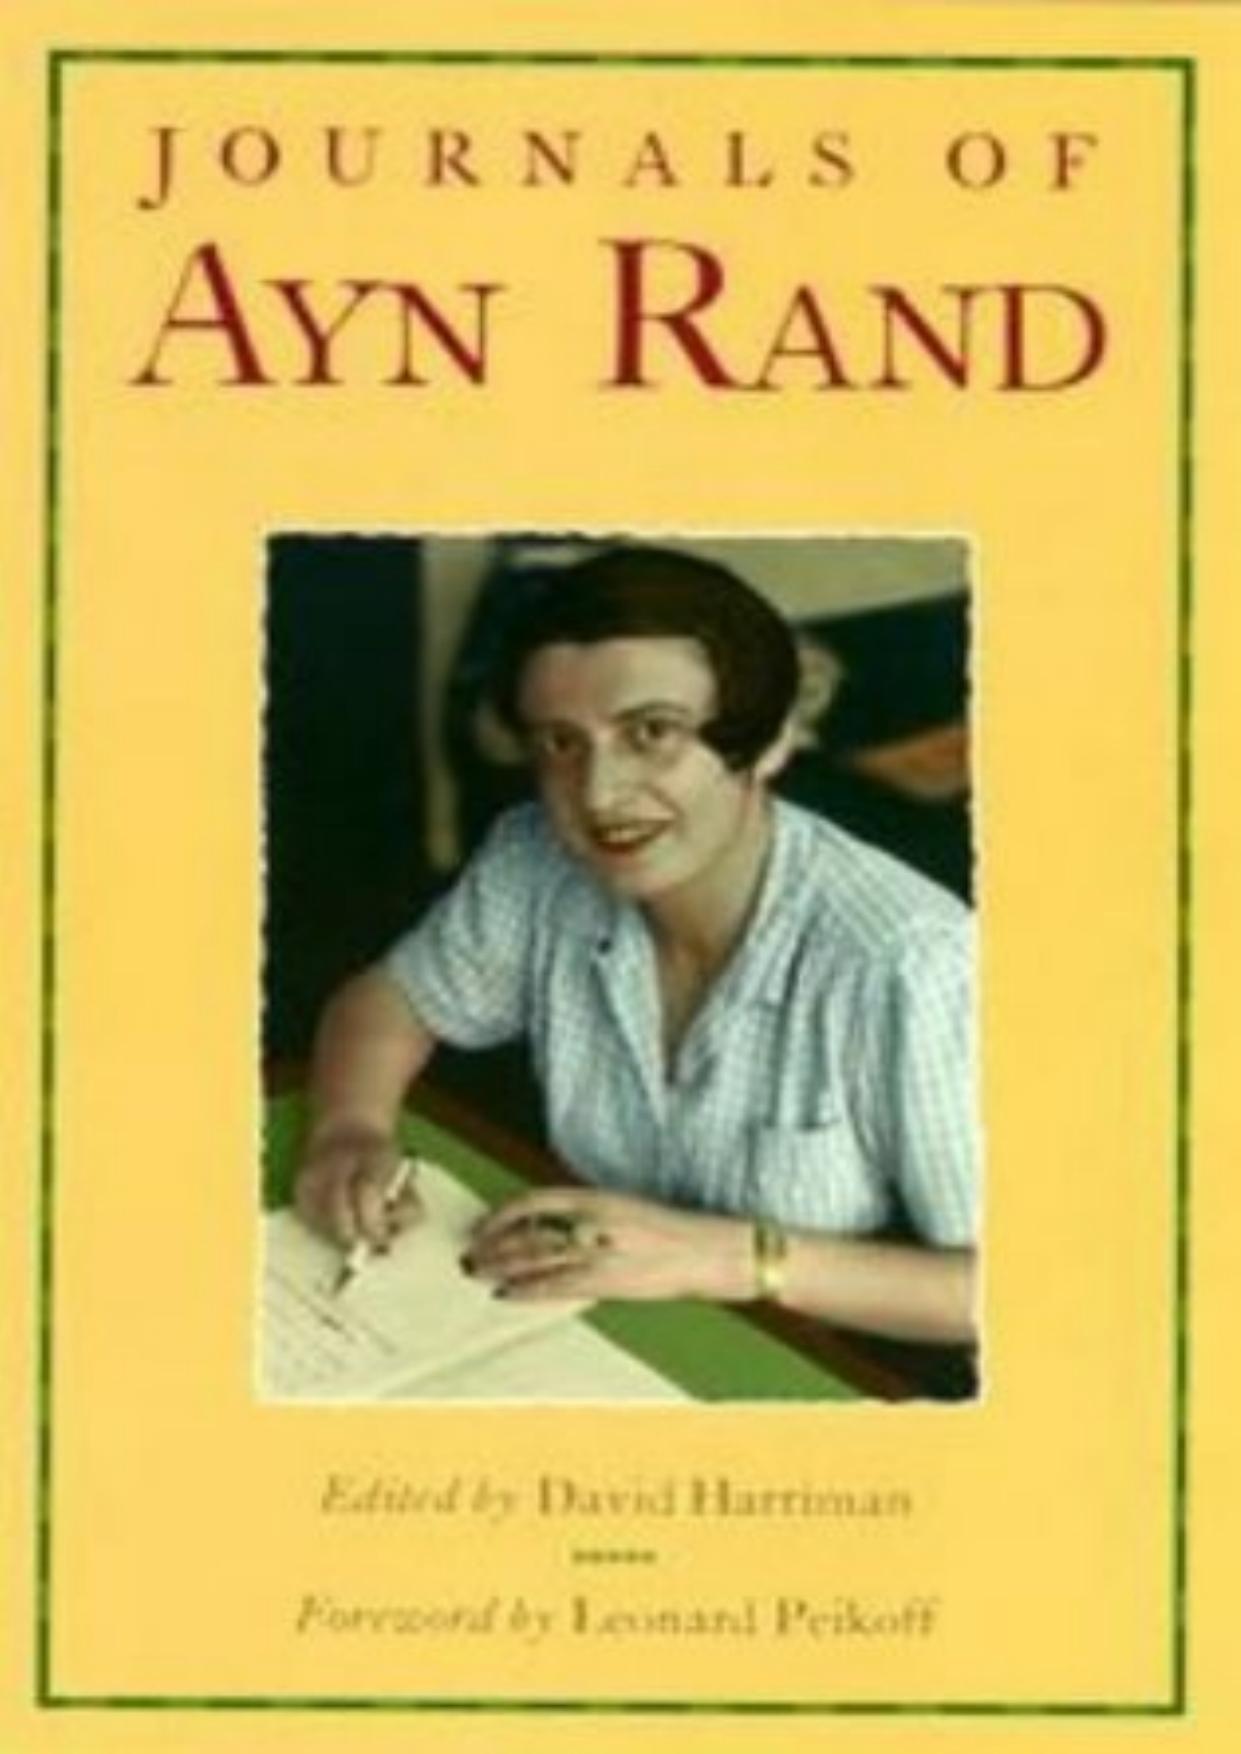 Journals of Ayn Rand by Ayn Rand & David Harriman & Leonard Peikoff